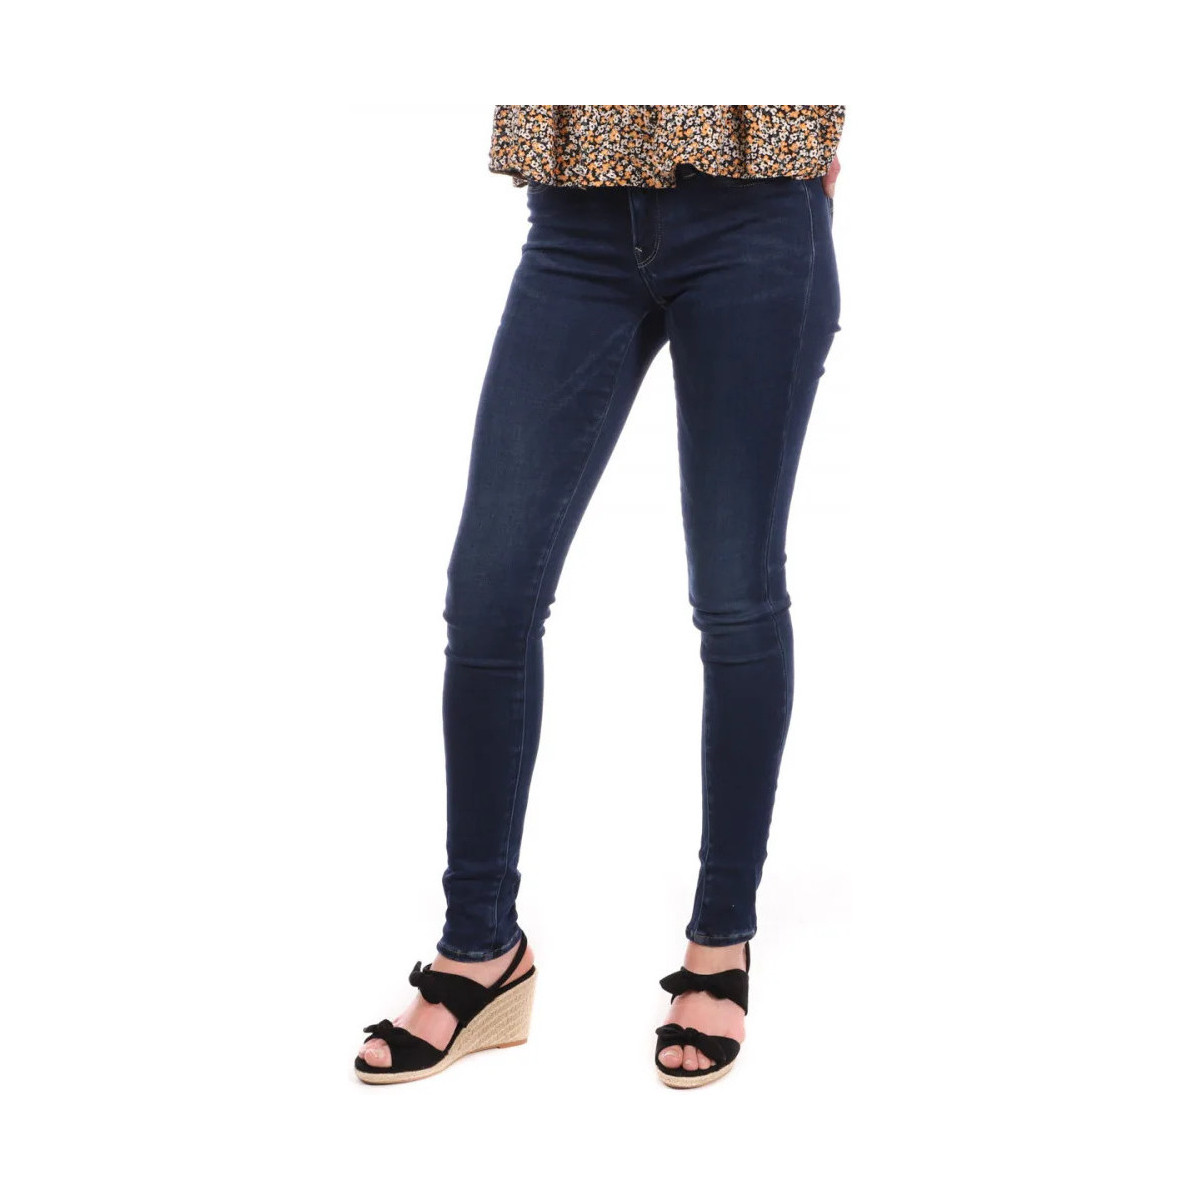 Vêtements Femme High-Rise Pants & Square-Toe Sandals Master Summer Trends 60686-5494 Bleu